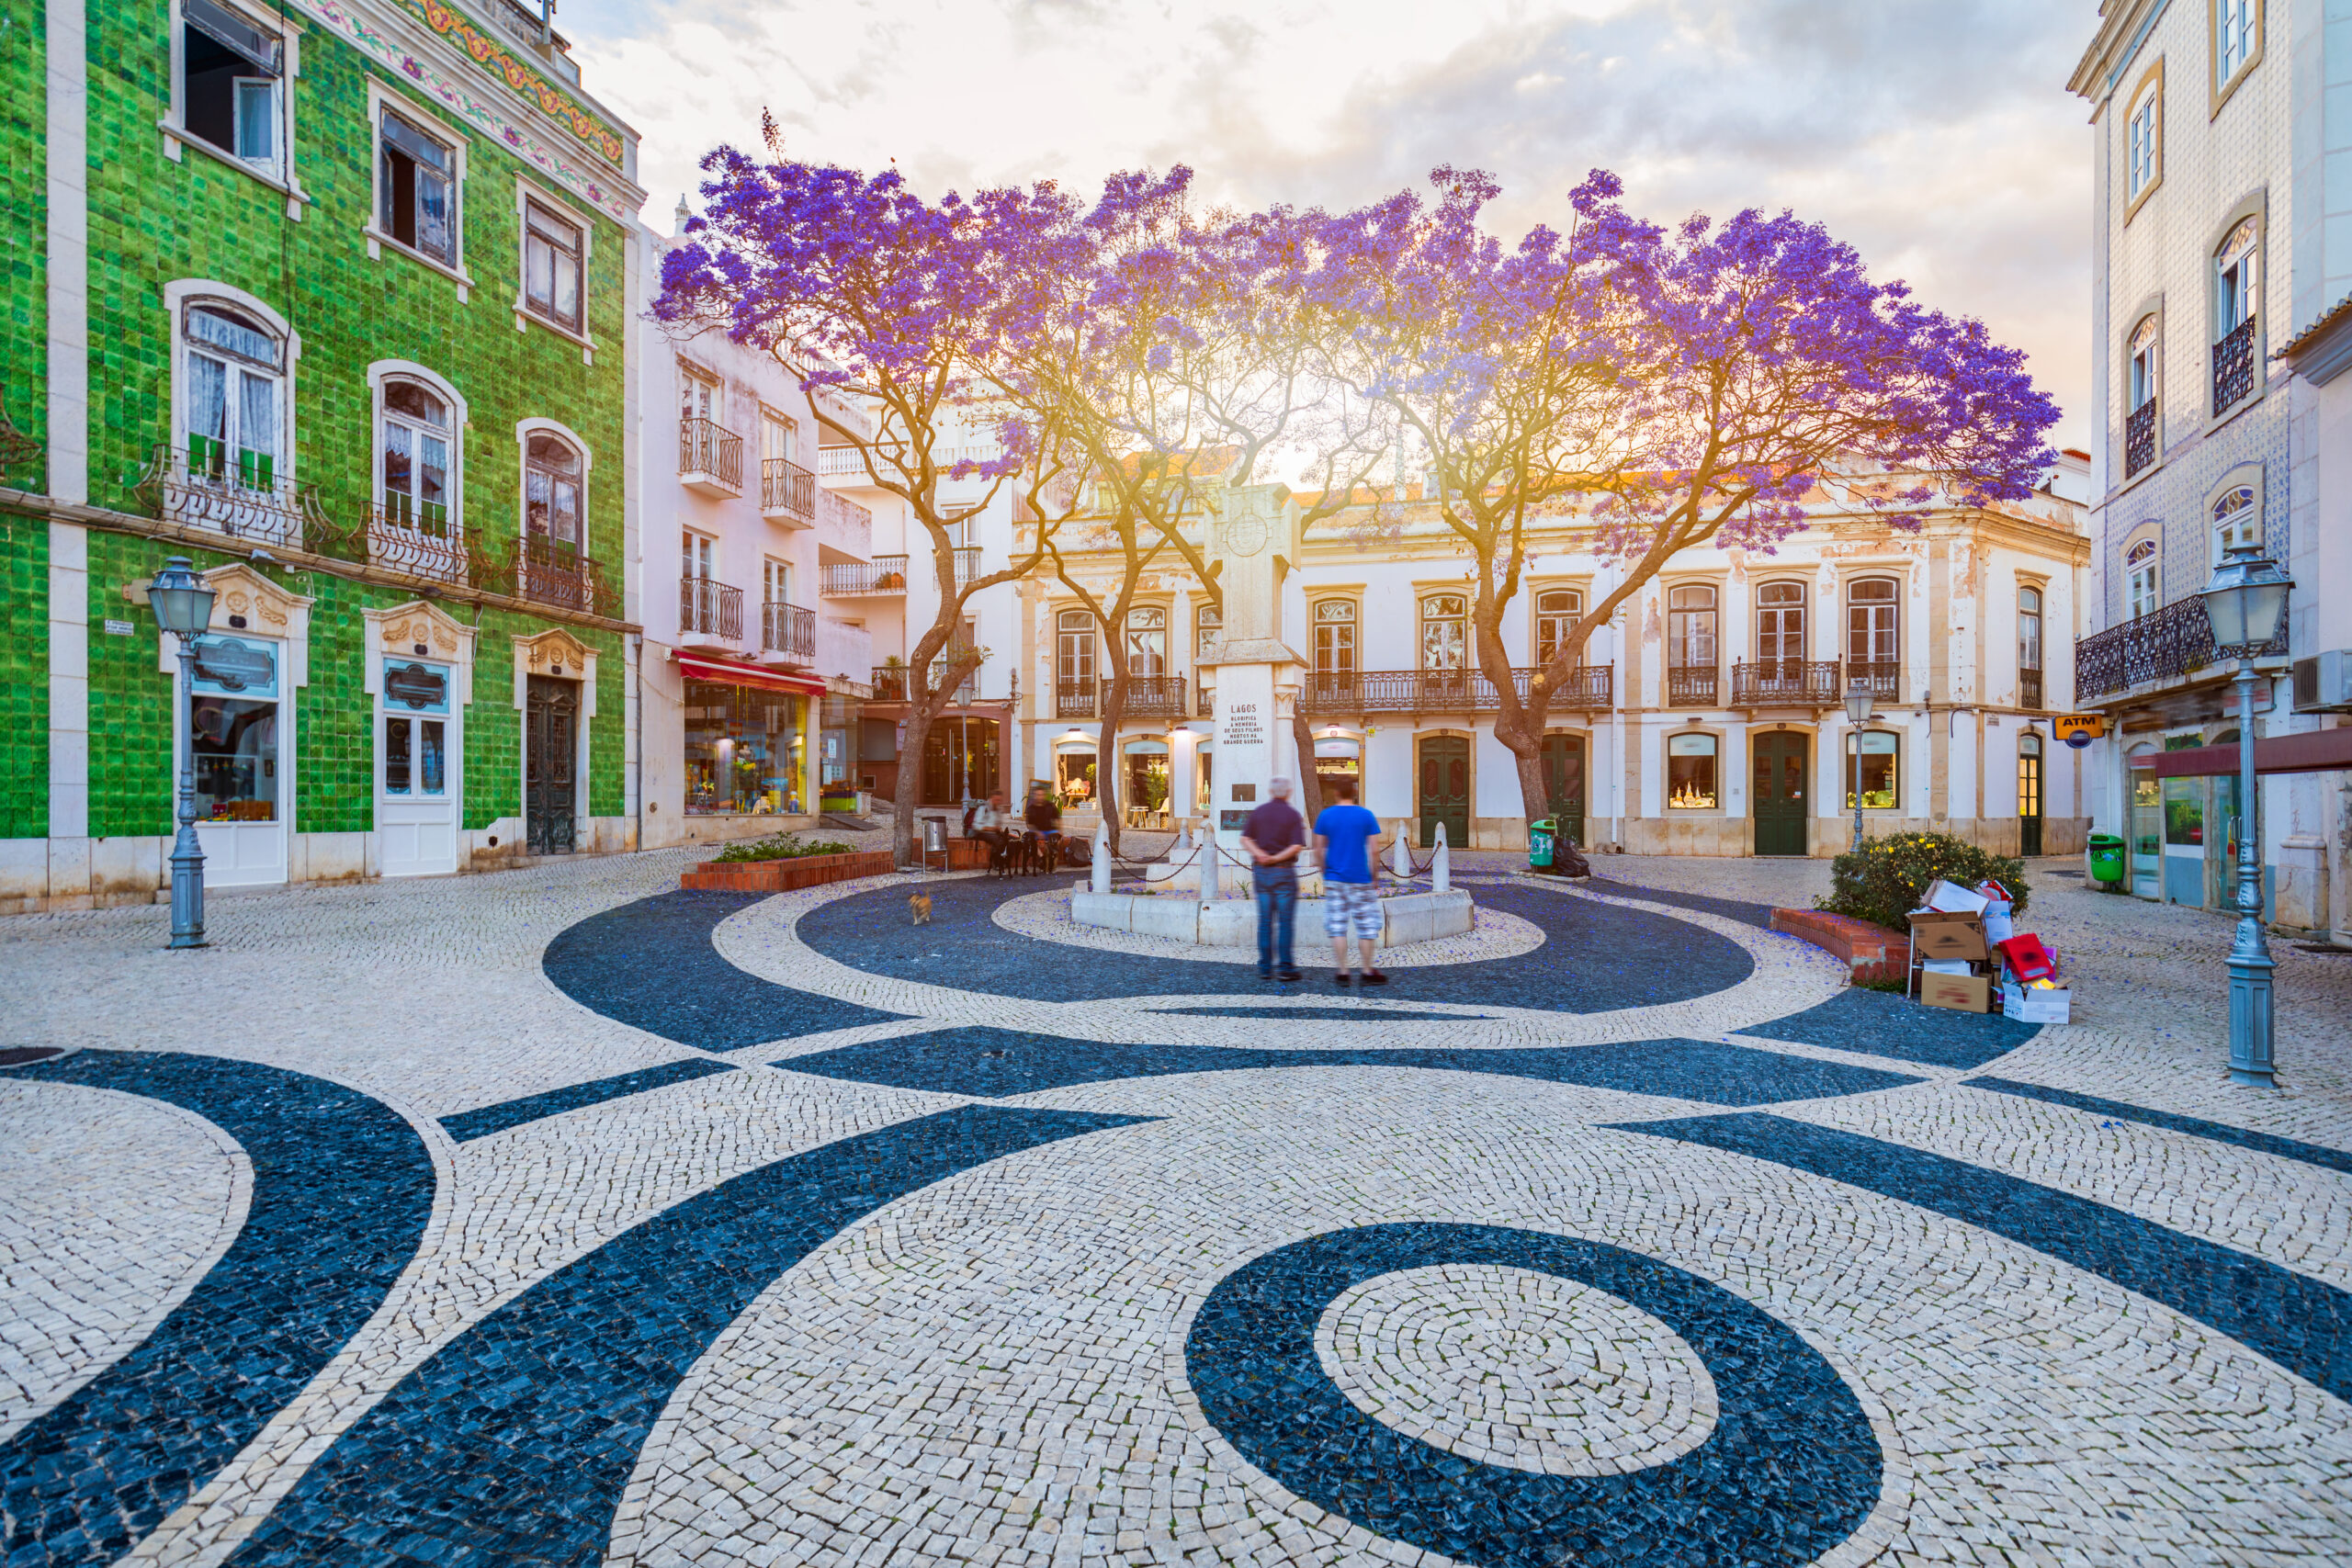 Algarve, Portugal (Photo Credit: DaLiu / Shutterstock)